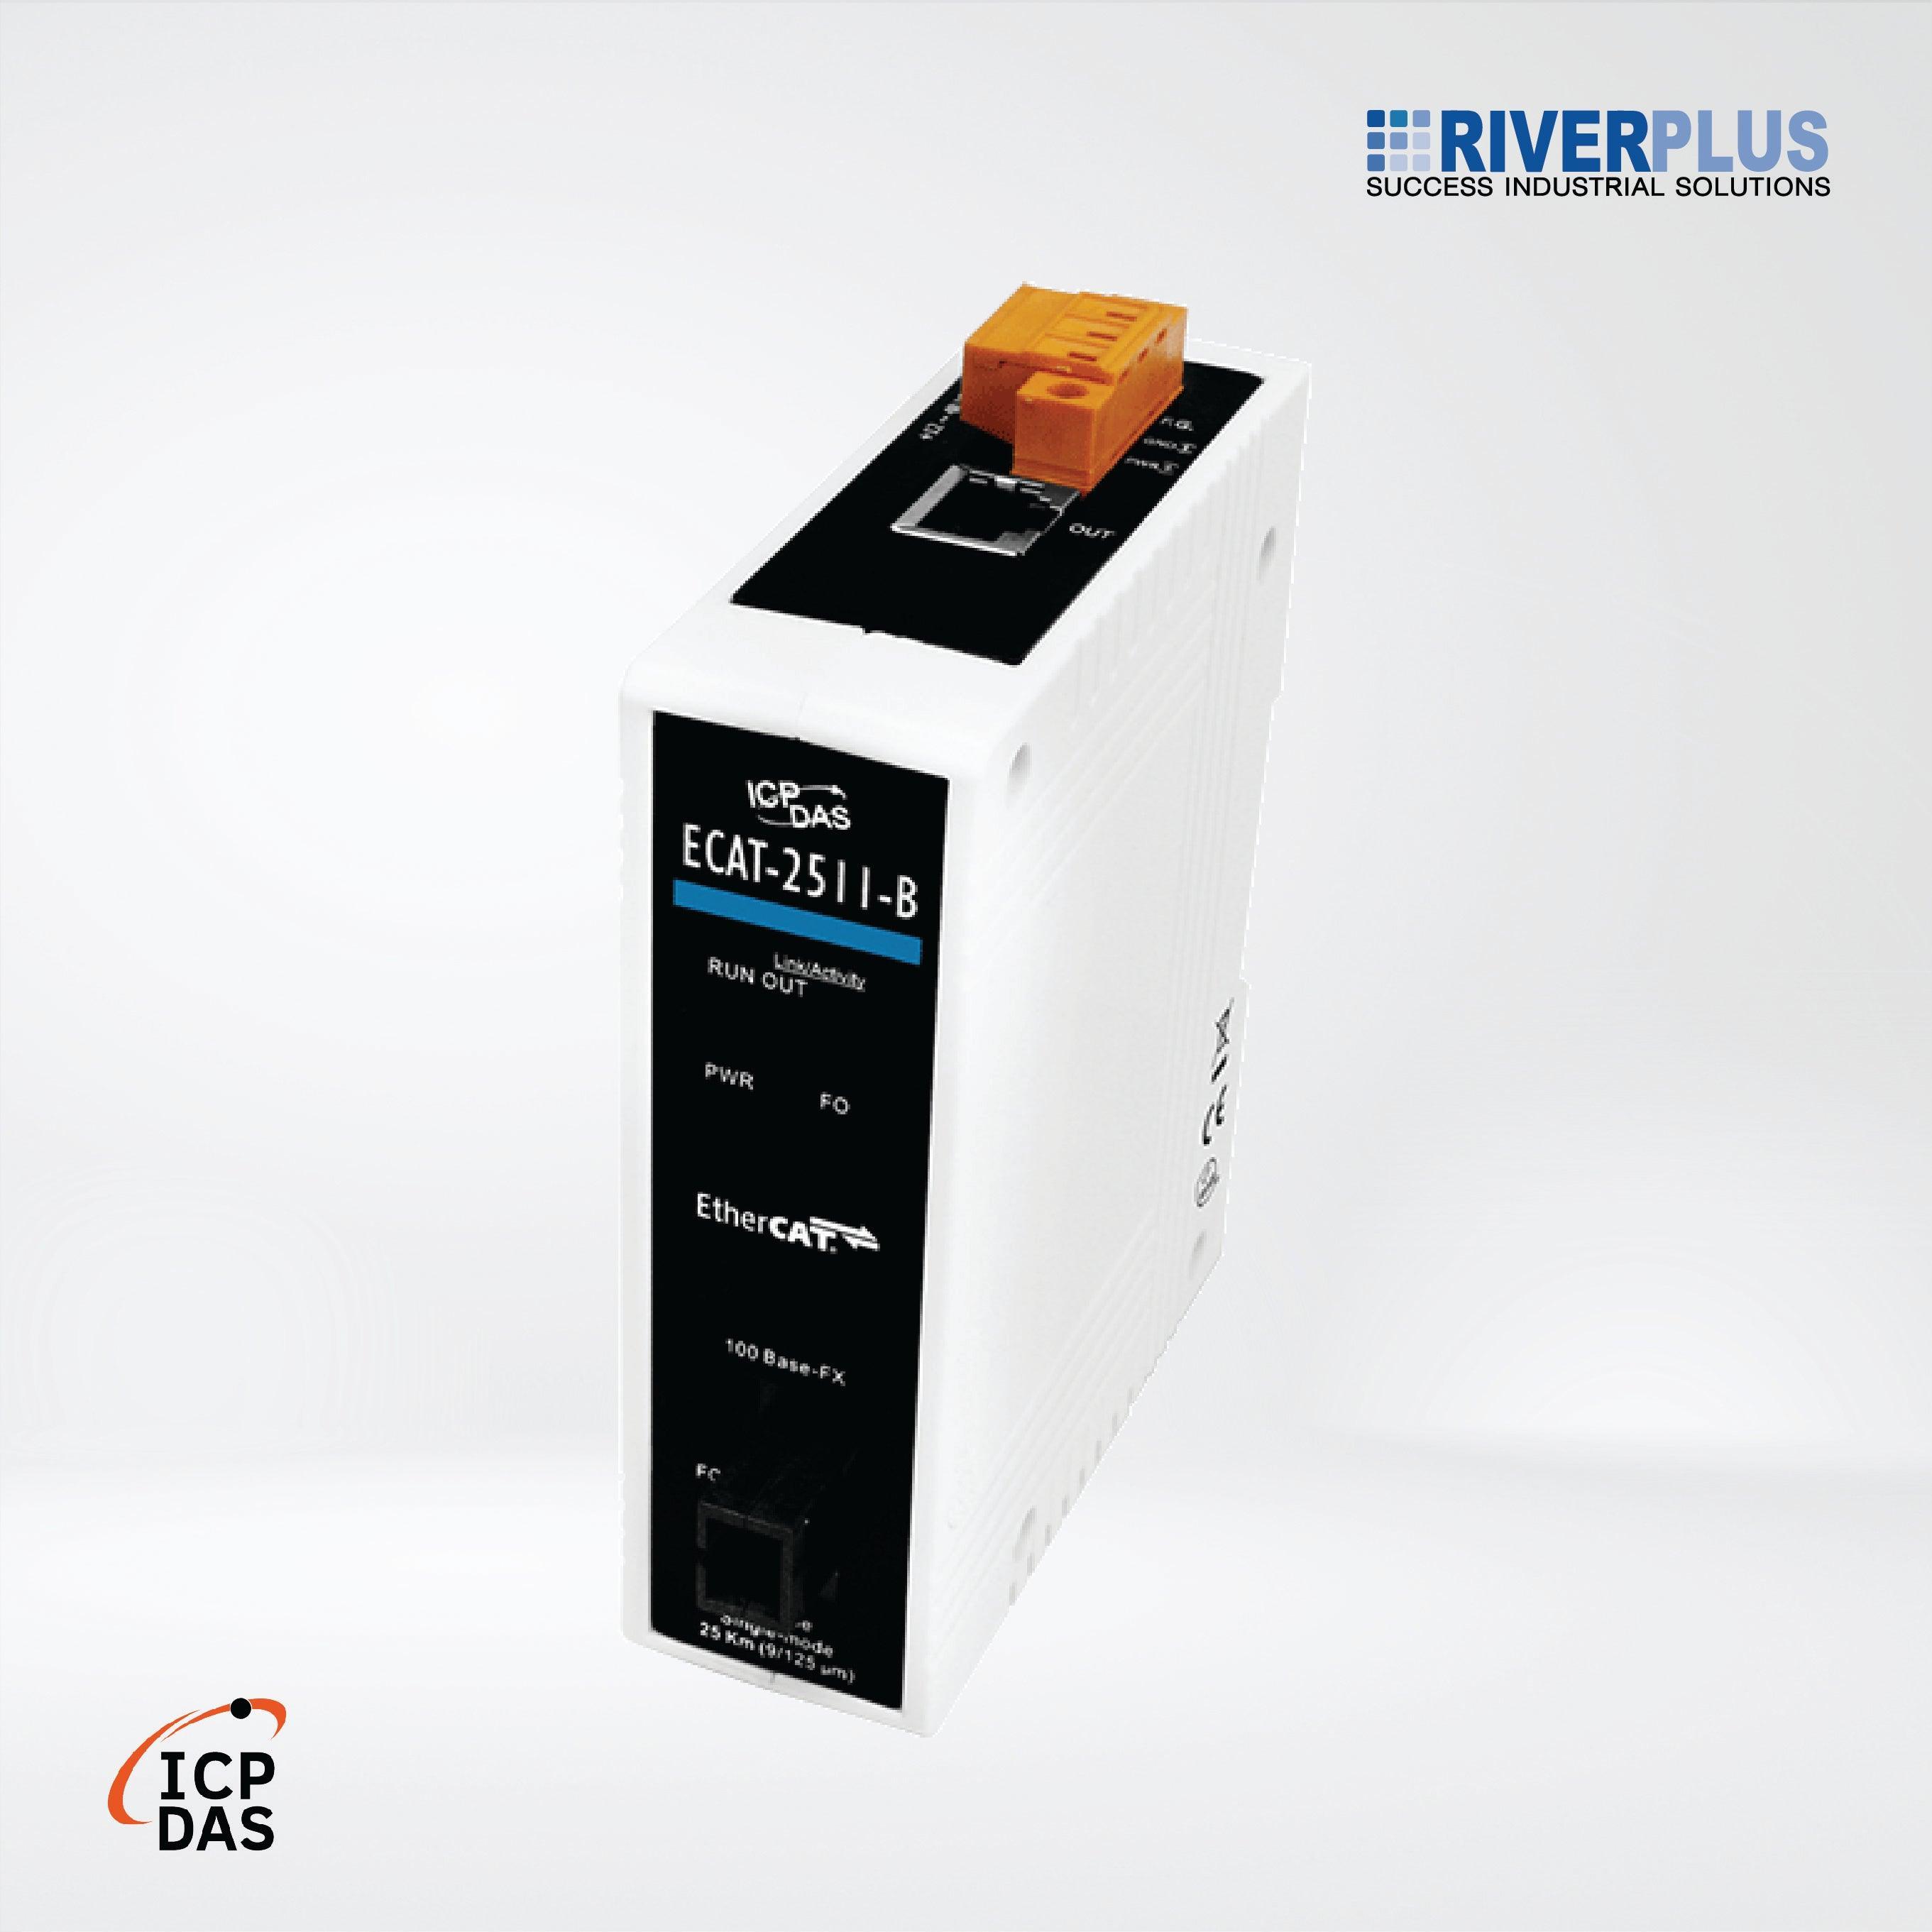 ECAT-2511-B EtherCAT to Single-mode Fiber Converter - Riverplus